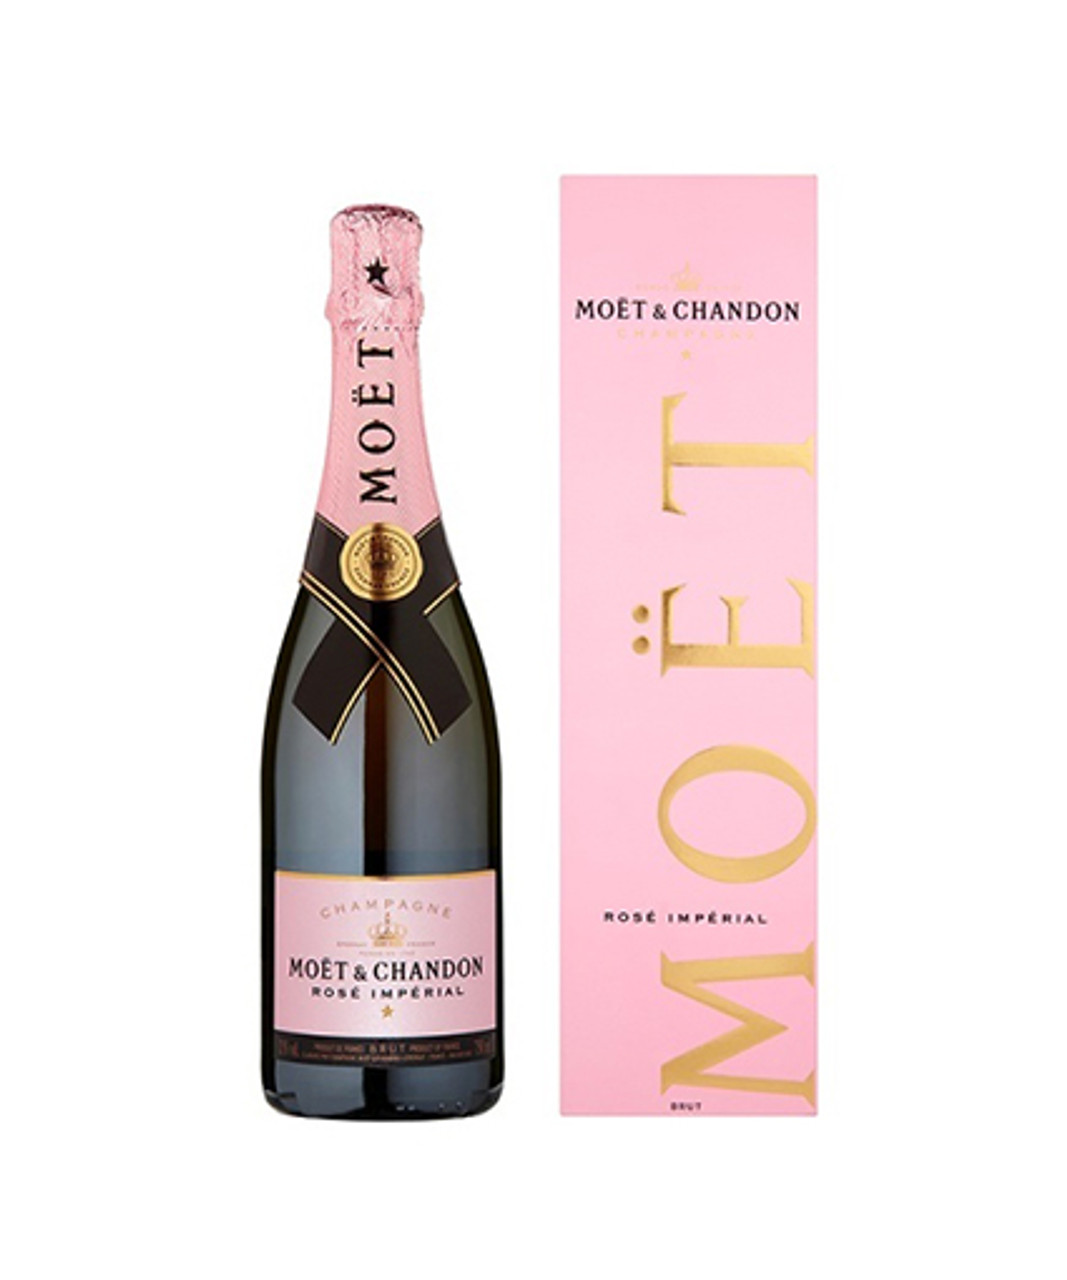 Champagne Moët & Chandon Wine Rosé Moet & Chandon Imperial Brut